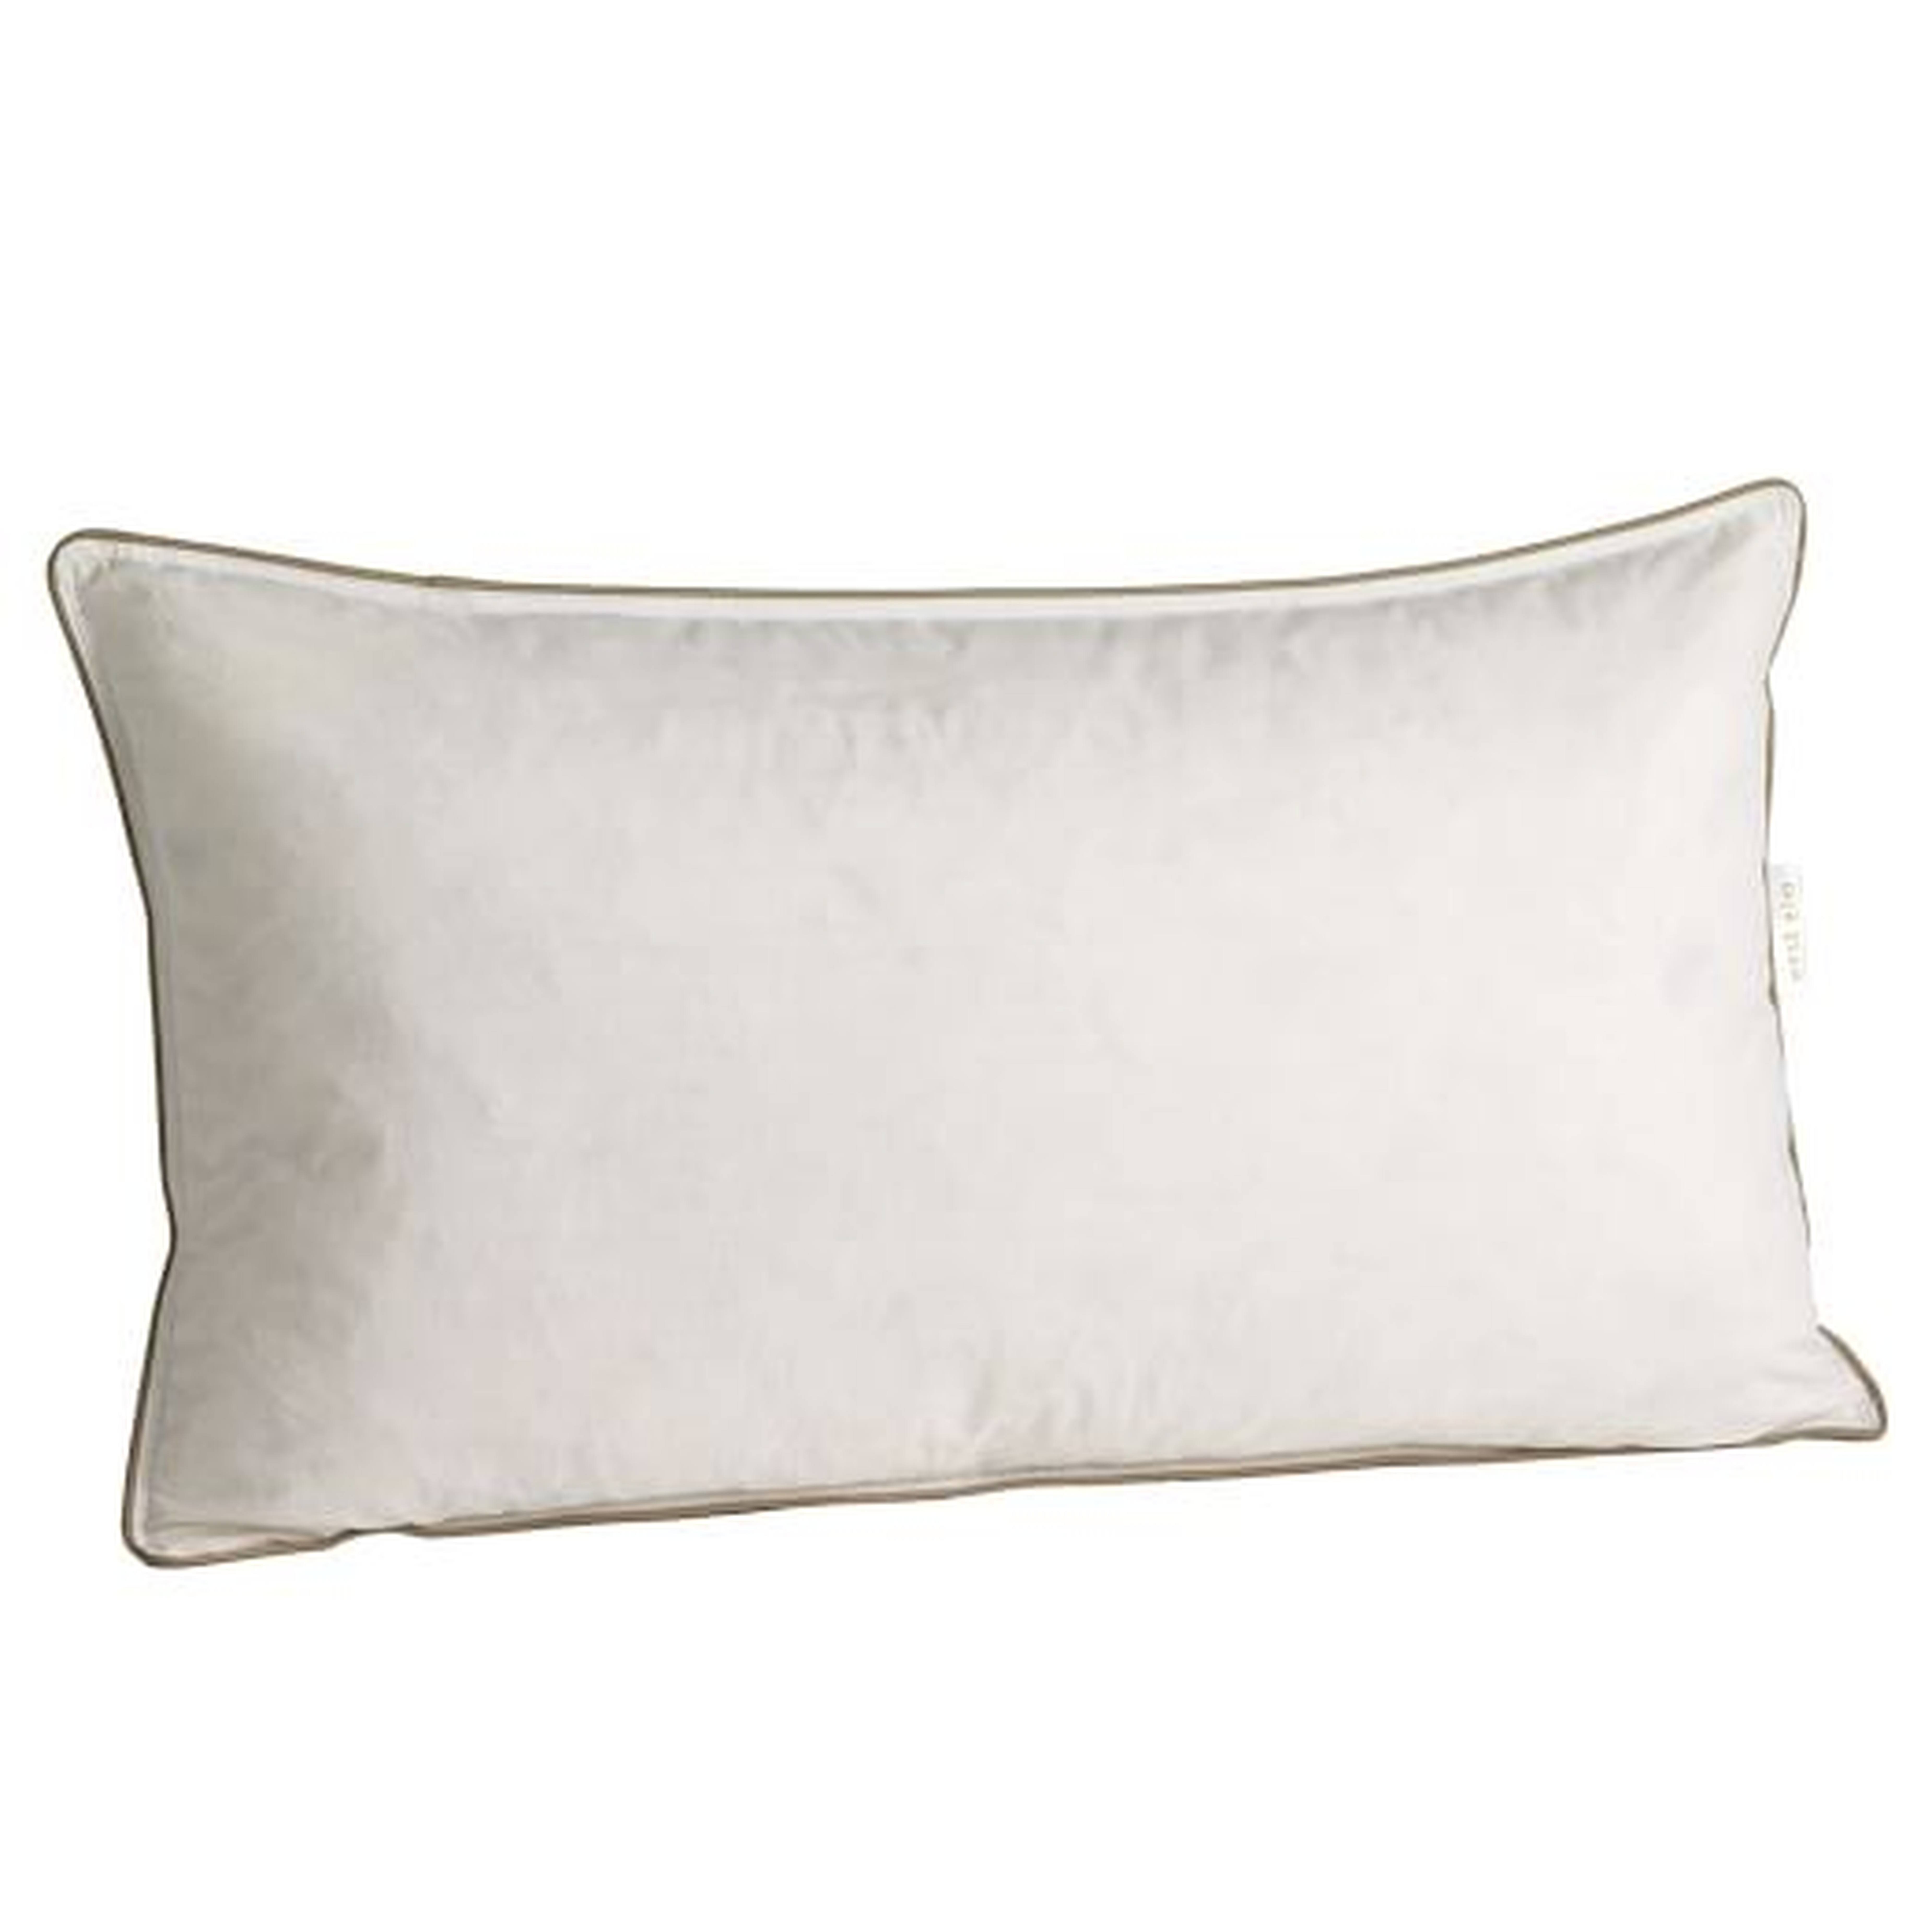 Decorative Pillow Insert – 12”x21” - West Elm